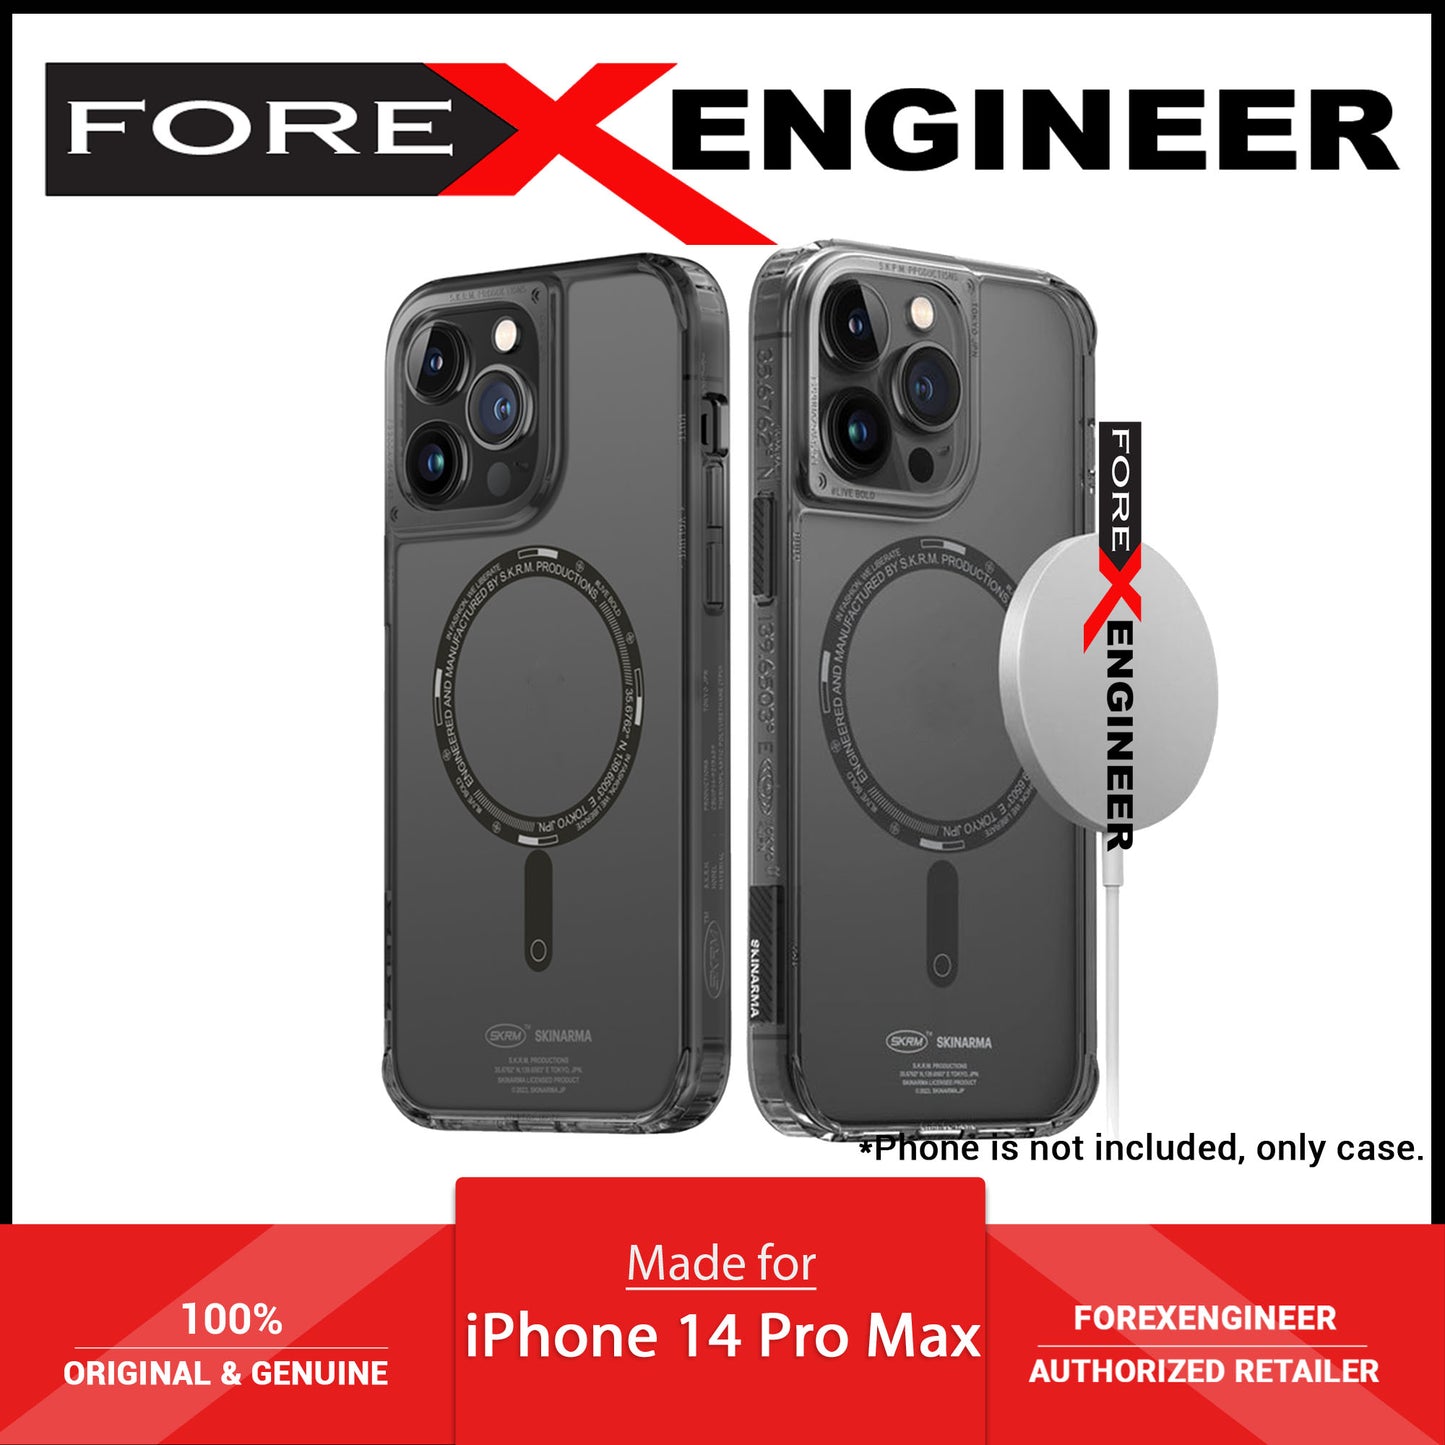 SKINARMA Saido Mag-Charge for iPhone 14 Pro Max - Compatible with Magsafe - Smoke (Barcode: 8886461242003 )